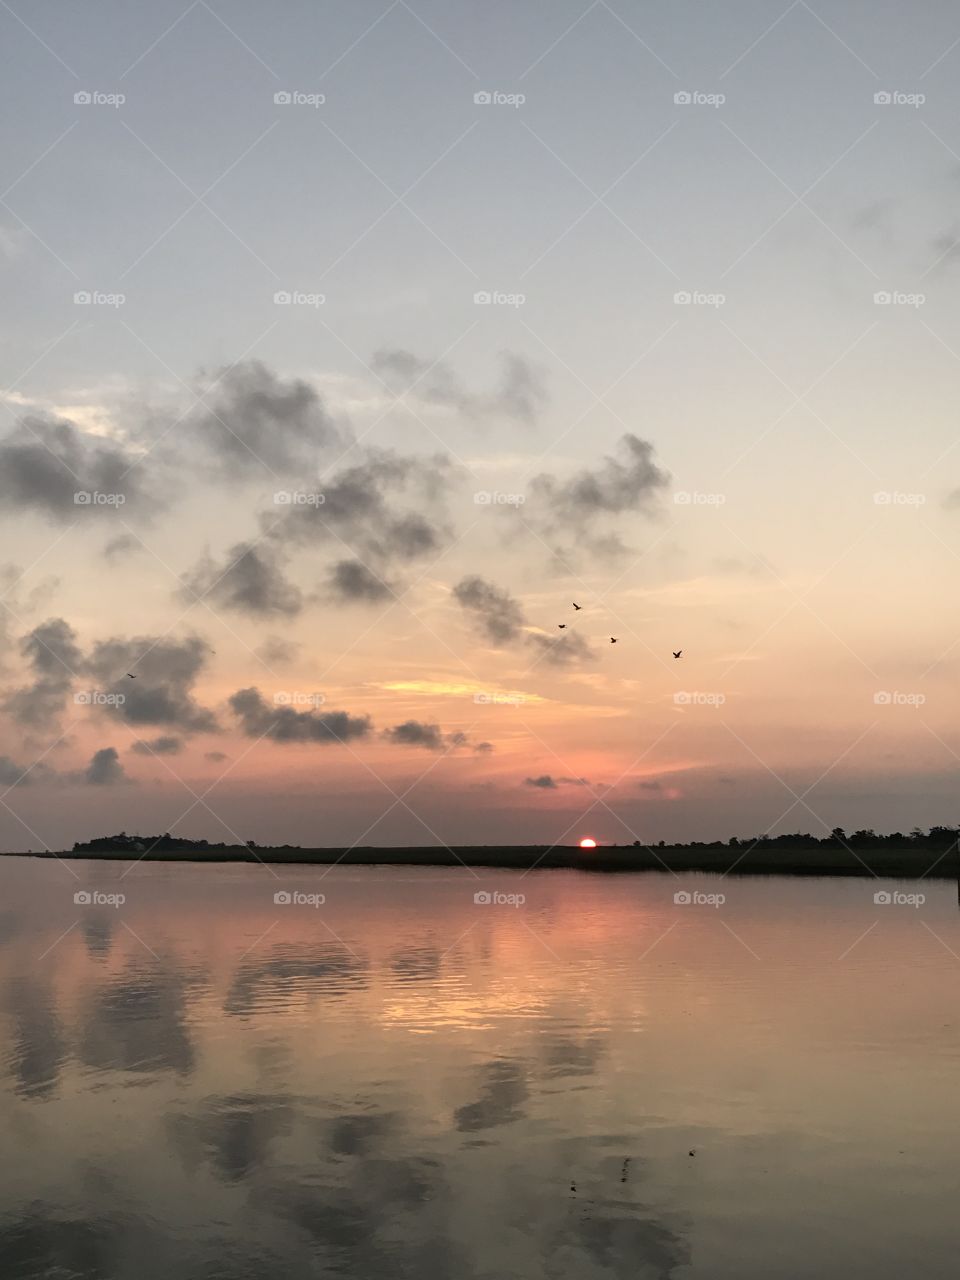 Sunrise with birds 